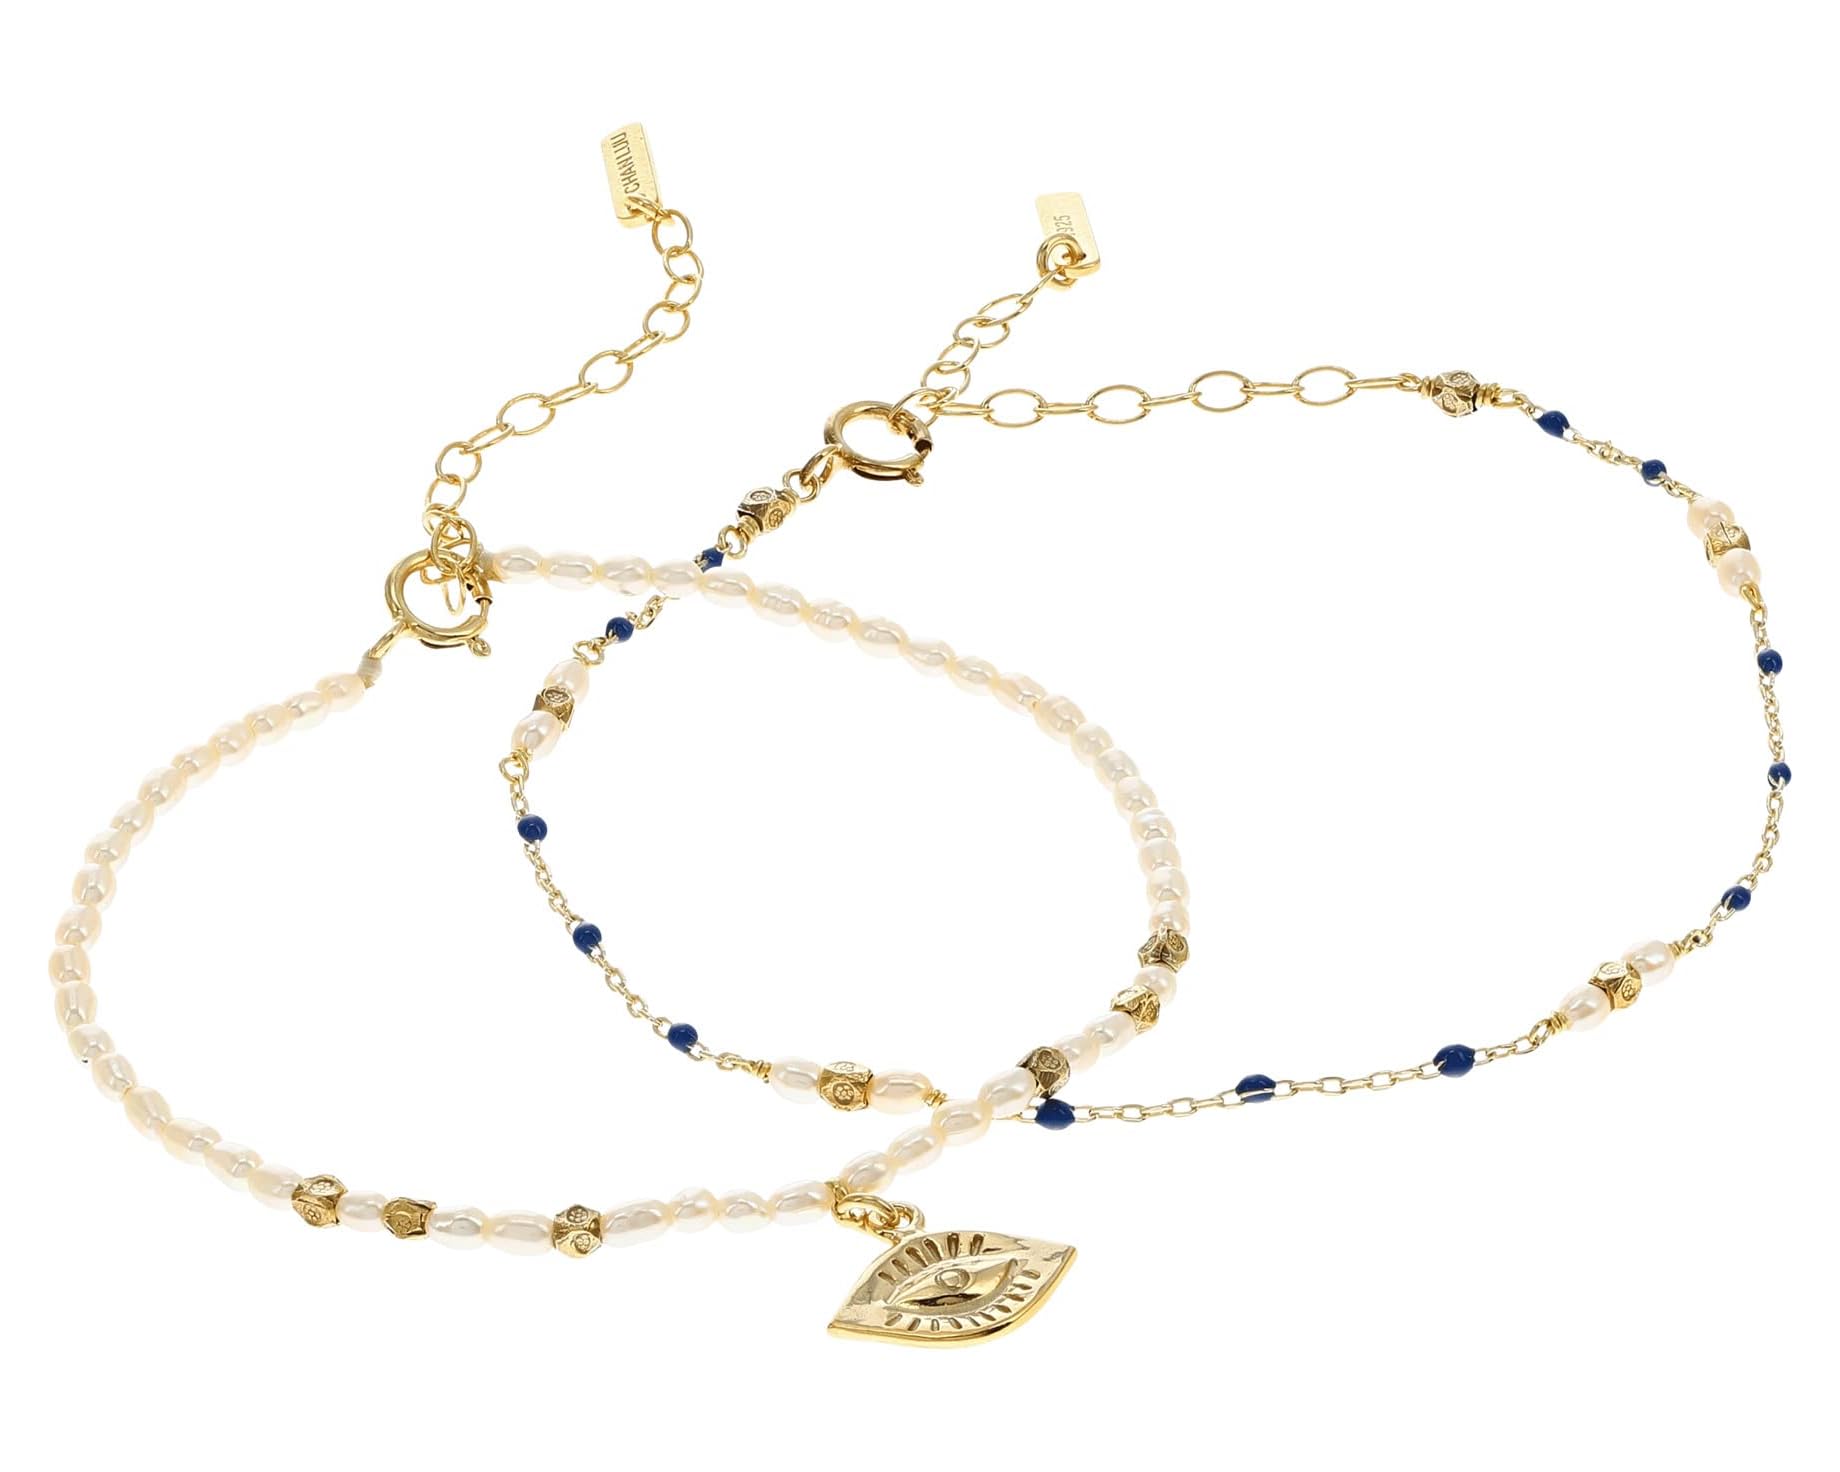 Chan Luu Two-Piece Bracelet Set with Enamel Beads and Pineapple Charm